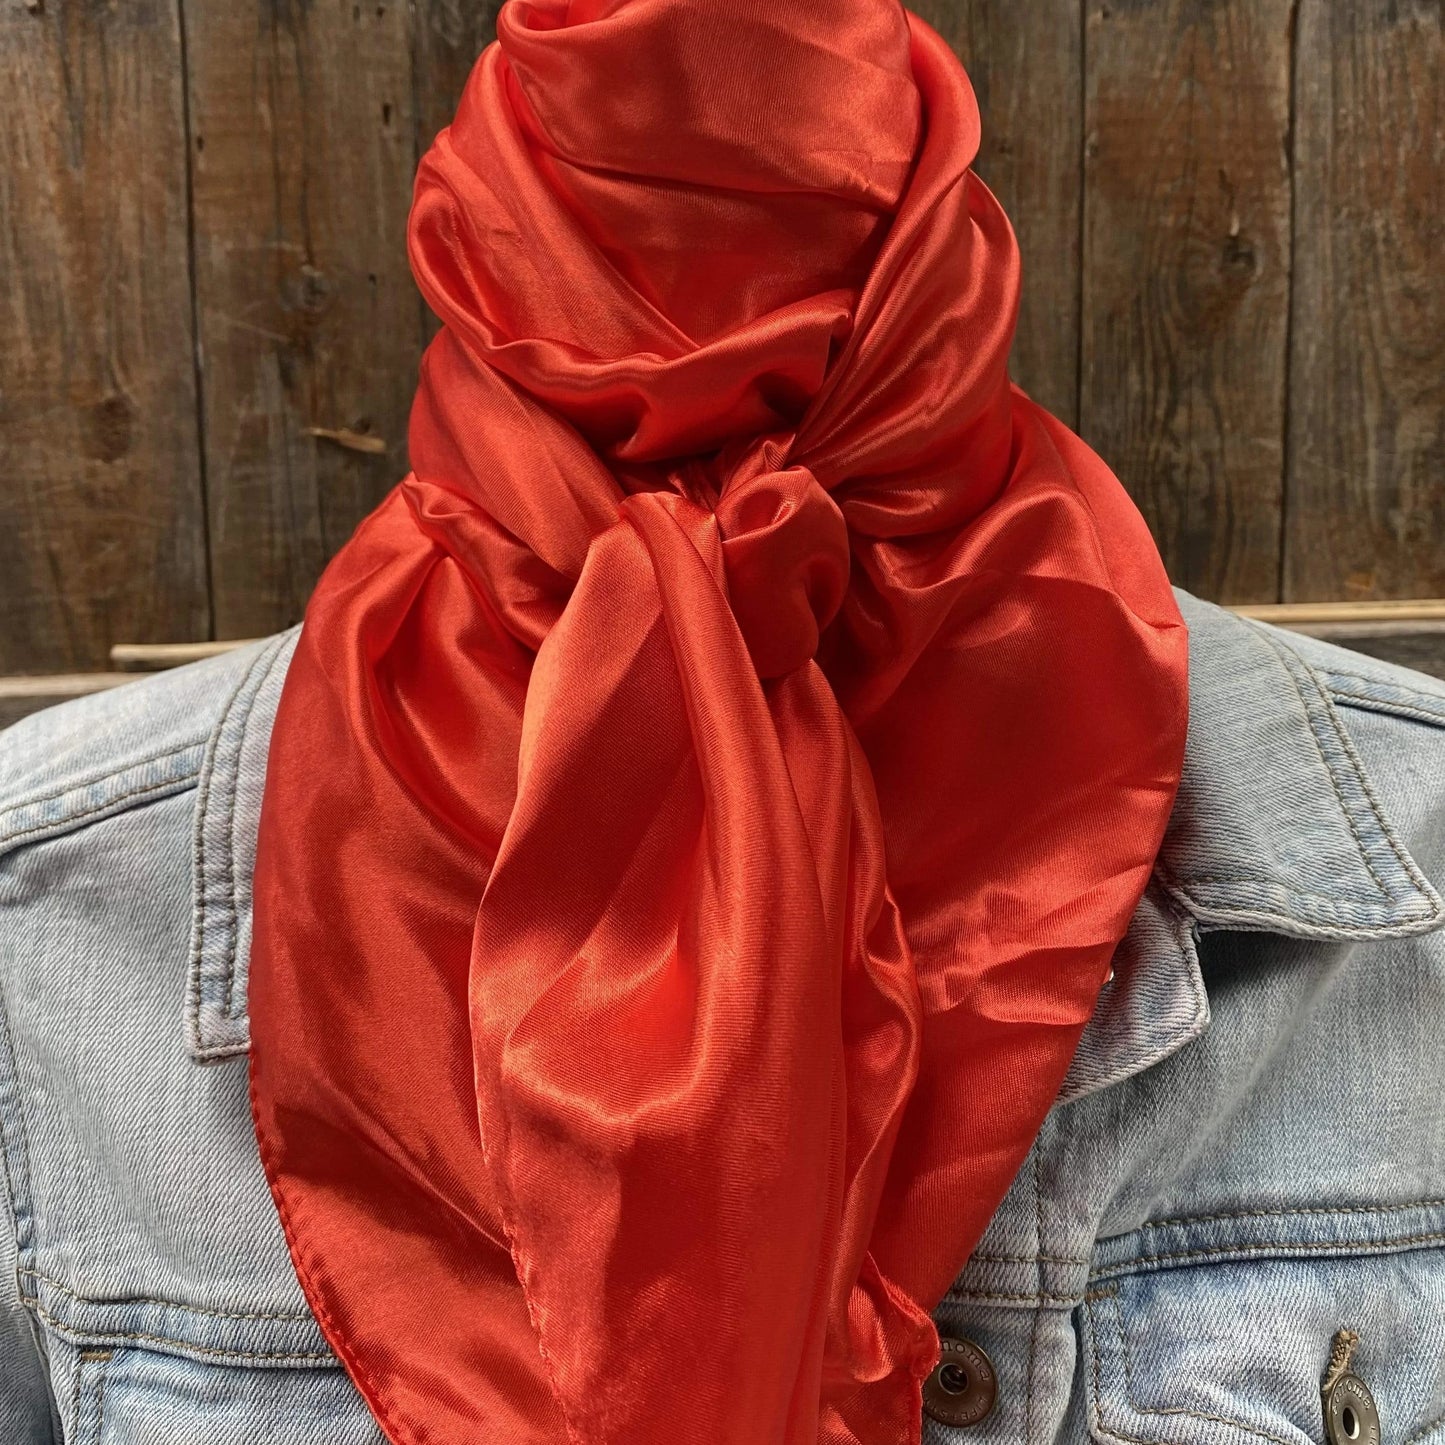 Wild rags/scarfs